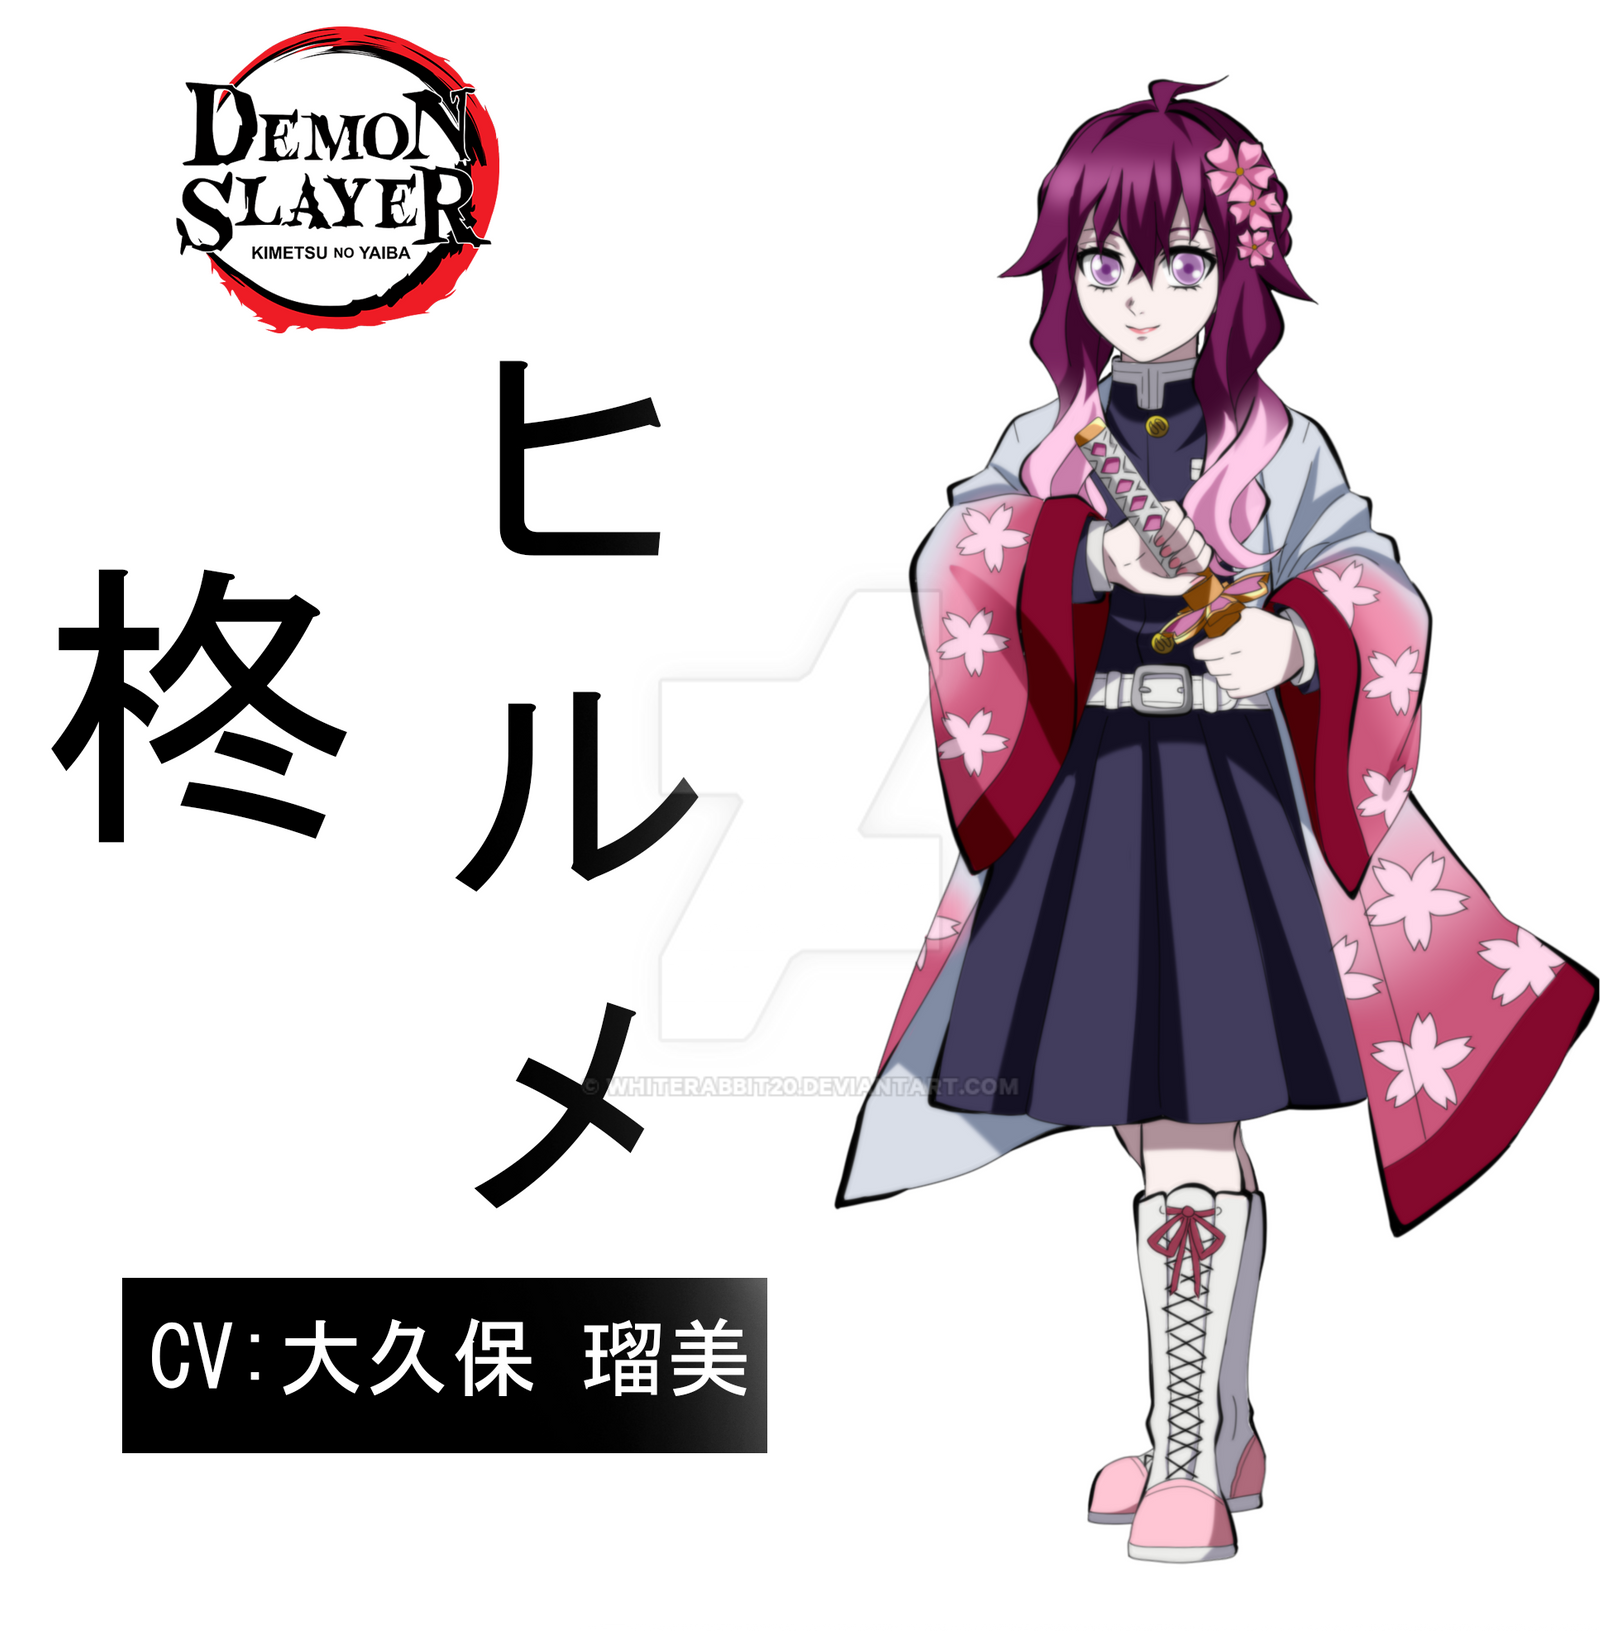 Kimetsu No Yaiba (Demon Slayer)  OC by remiNISE123 on DeviantArt